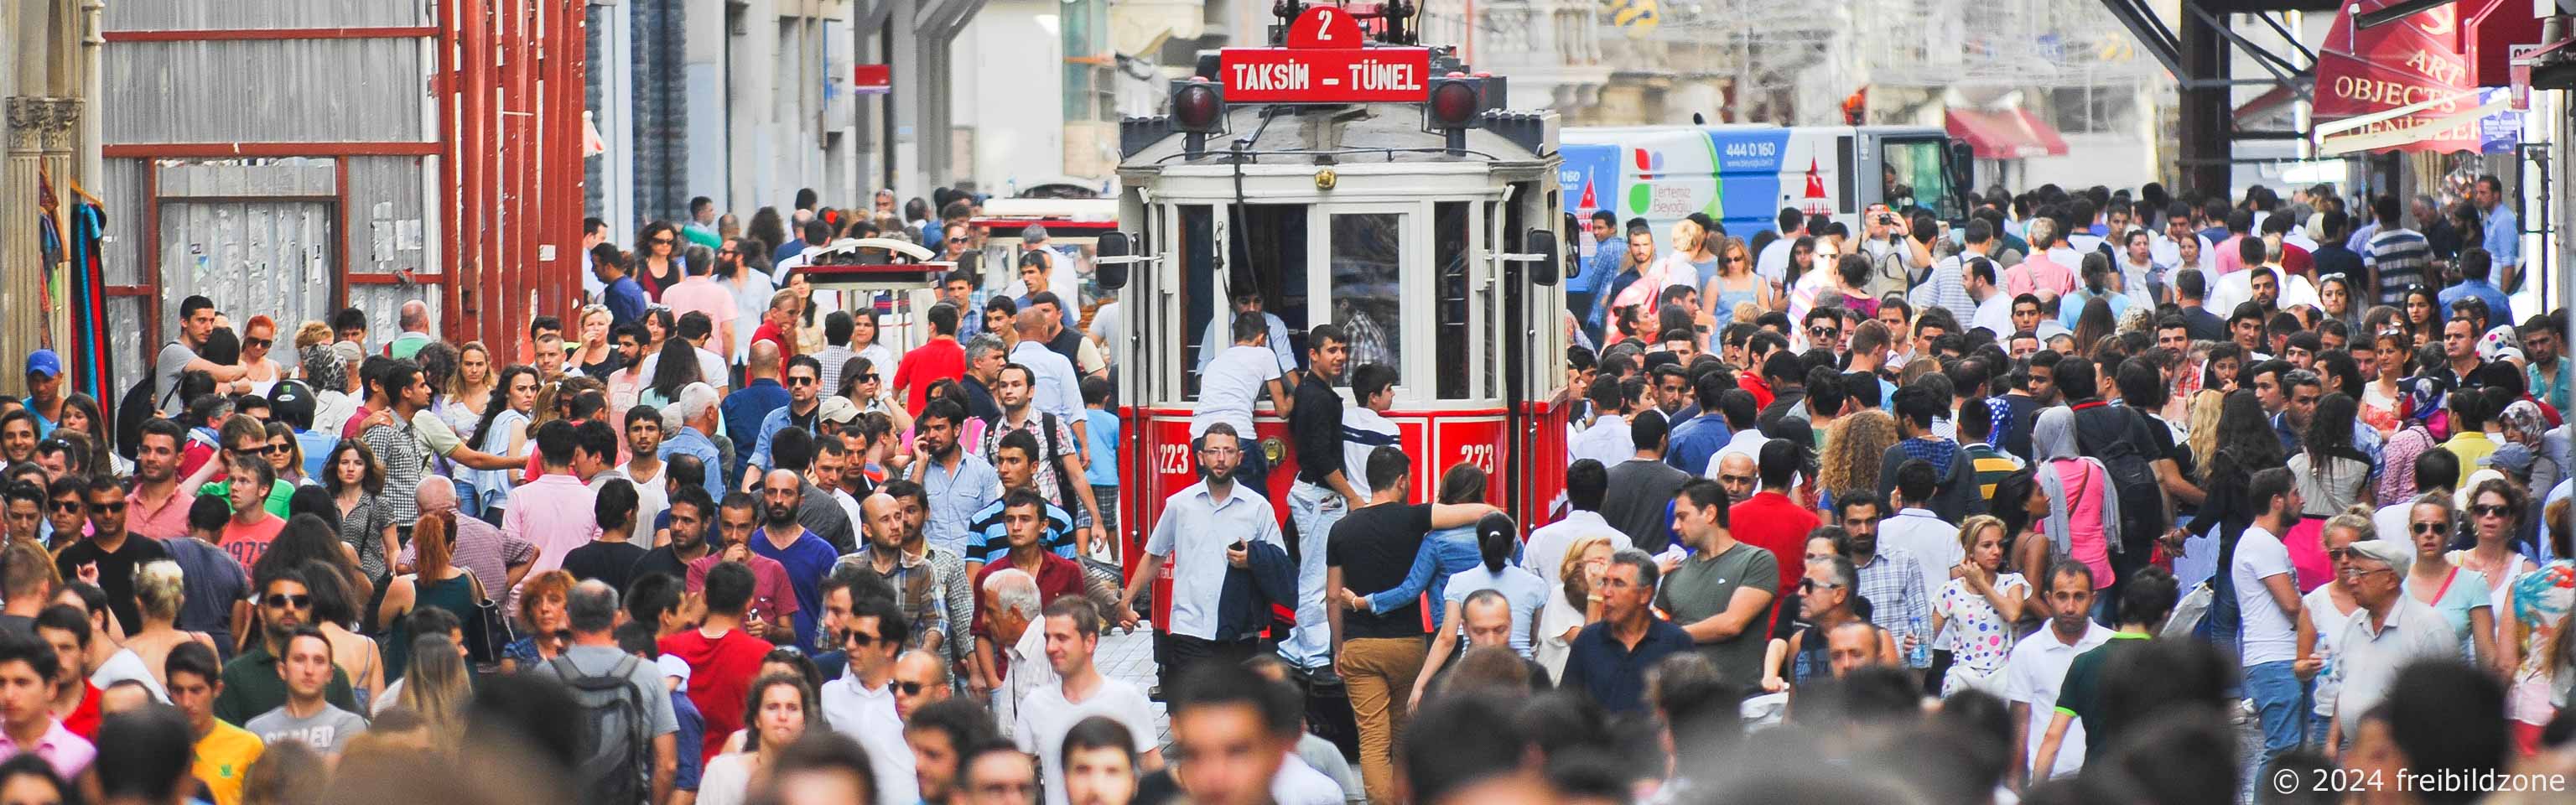 Taksim Square to Tünel, Istanbul, Turkey